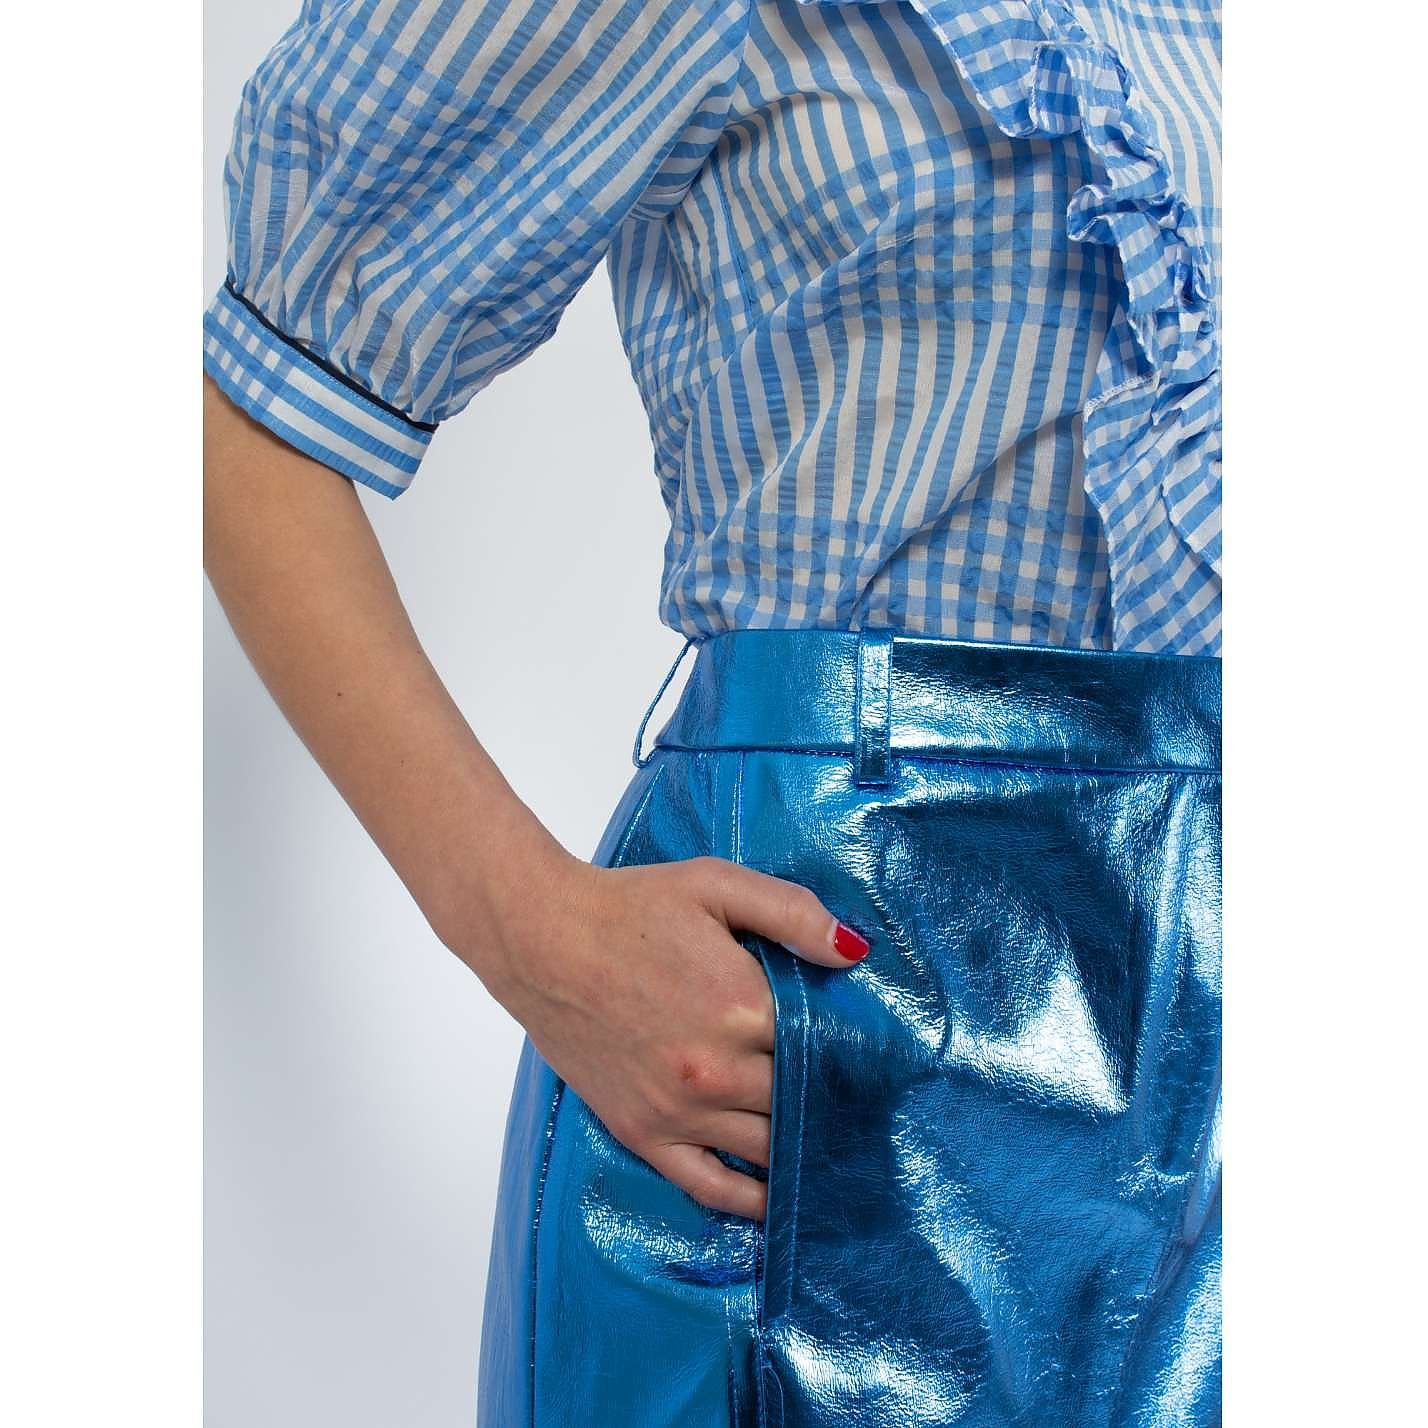 Tibi High Waist Metallic Skirt